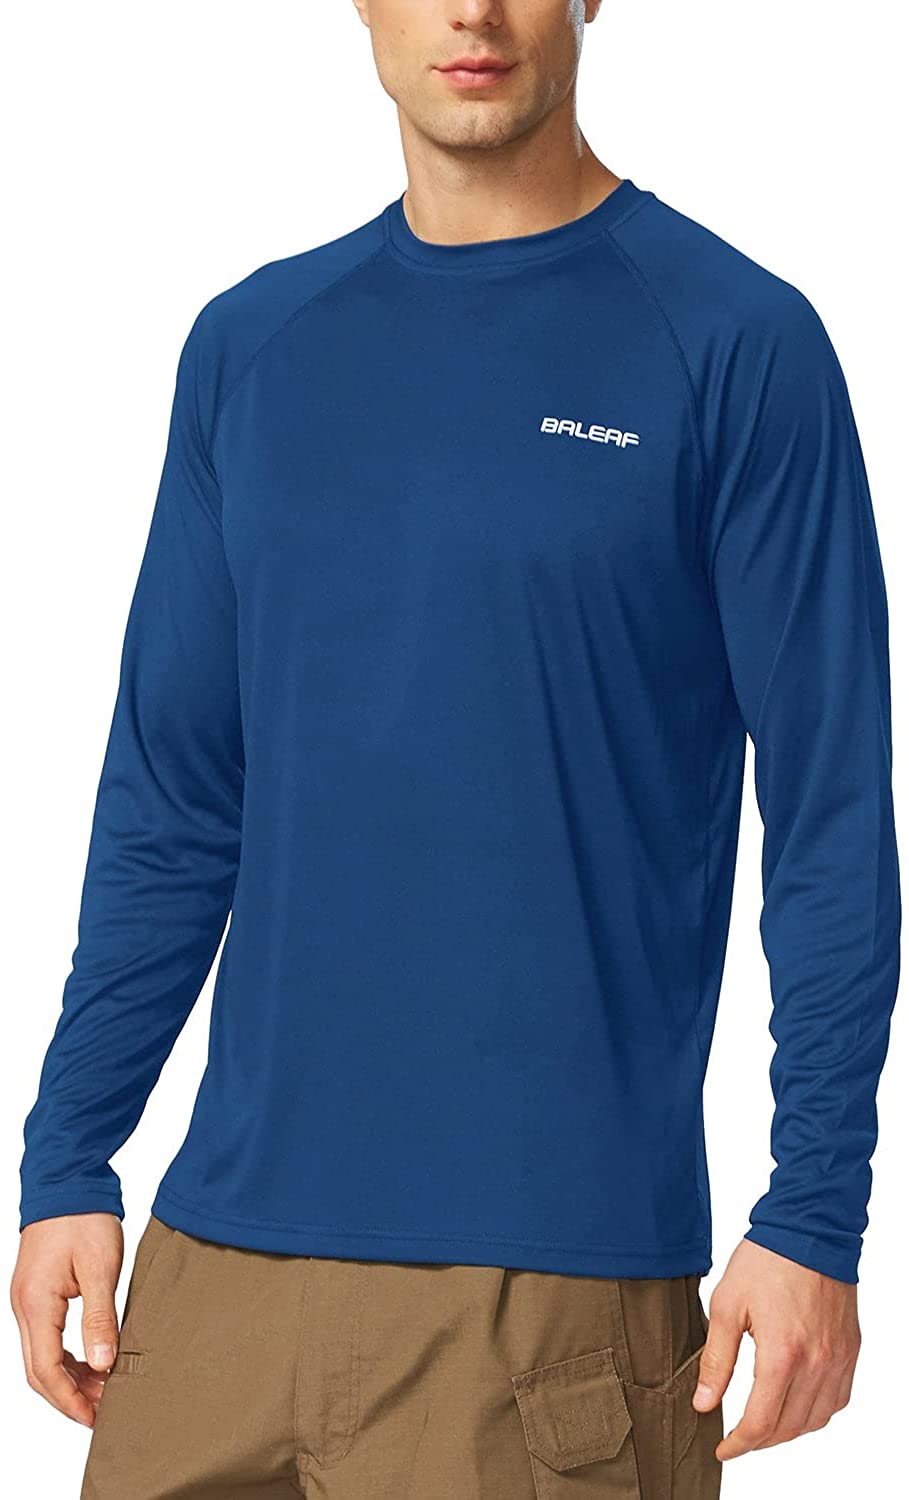 BALEAF Men's Long Sleeve Shirts Lightweight UPF 50+ Sun Protection SPF ...